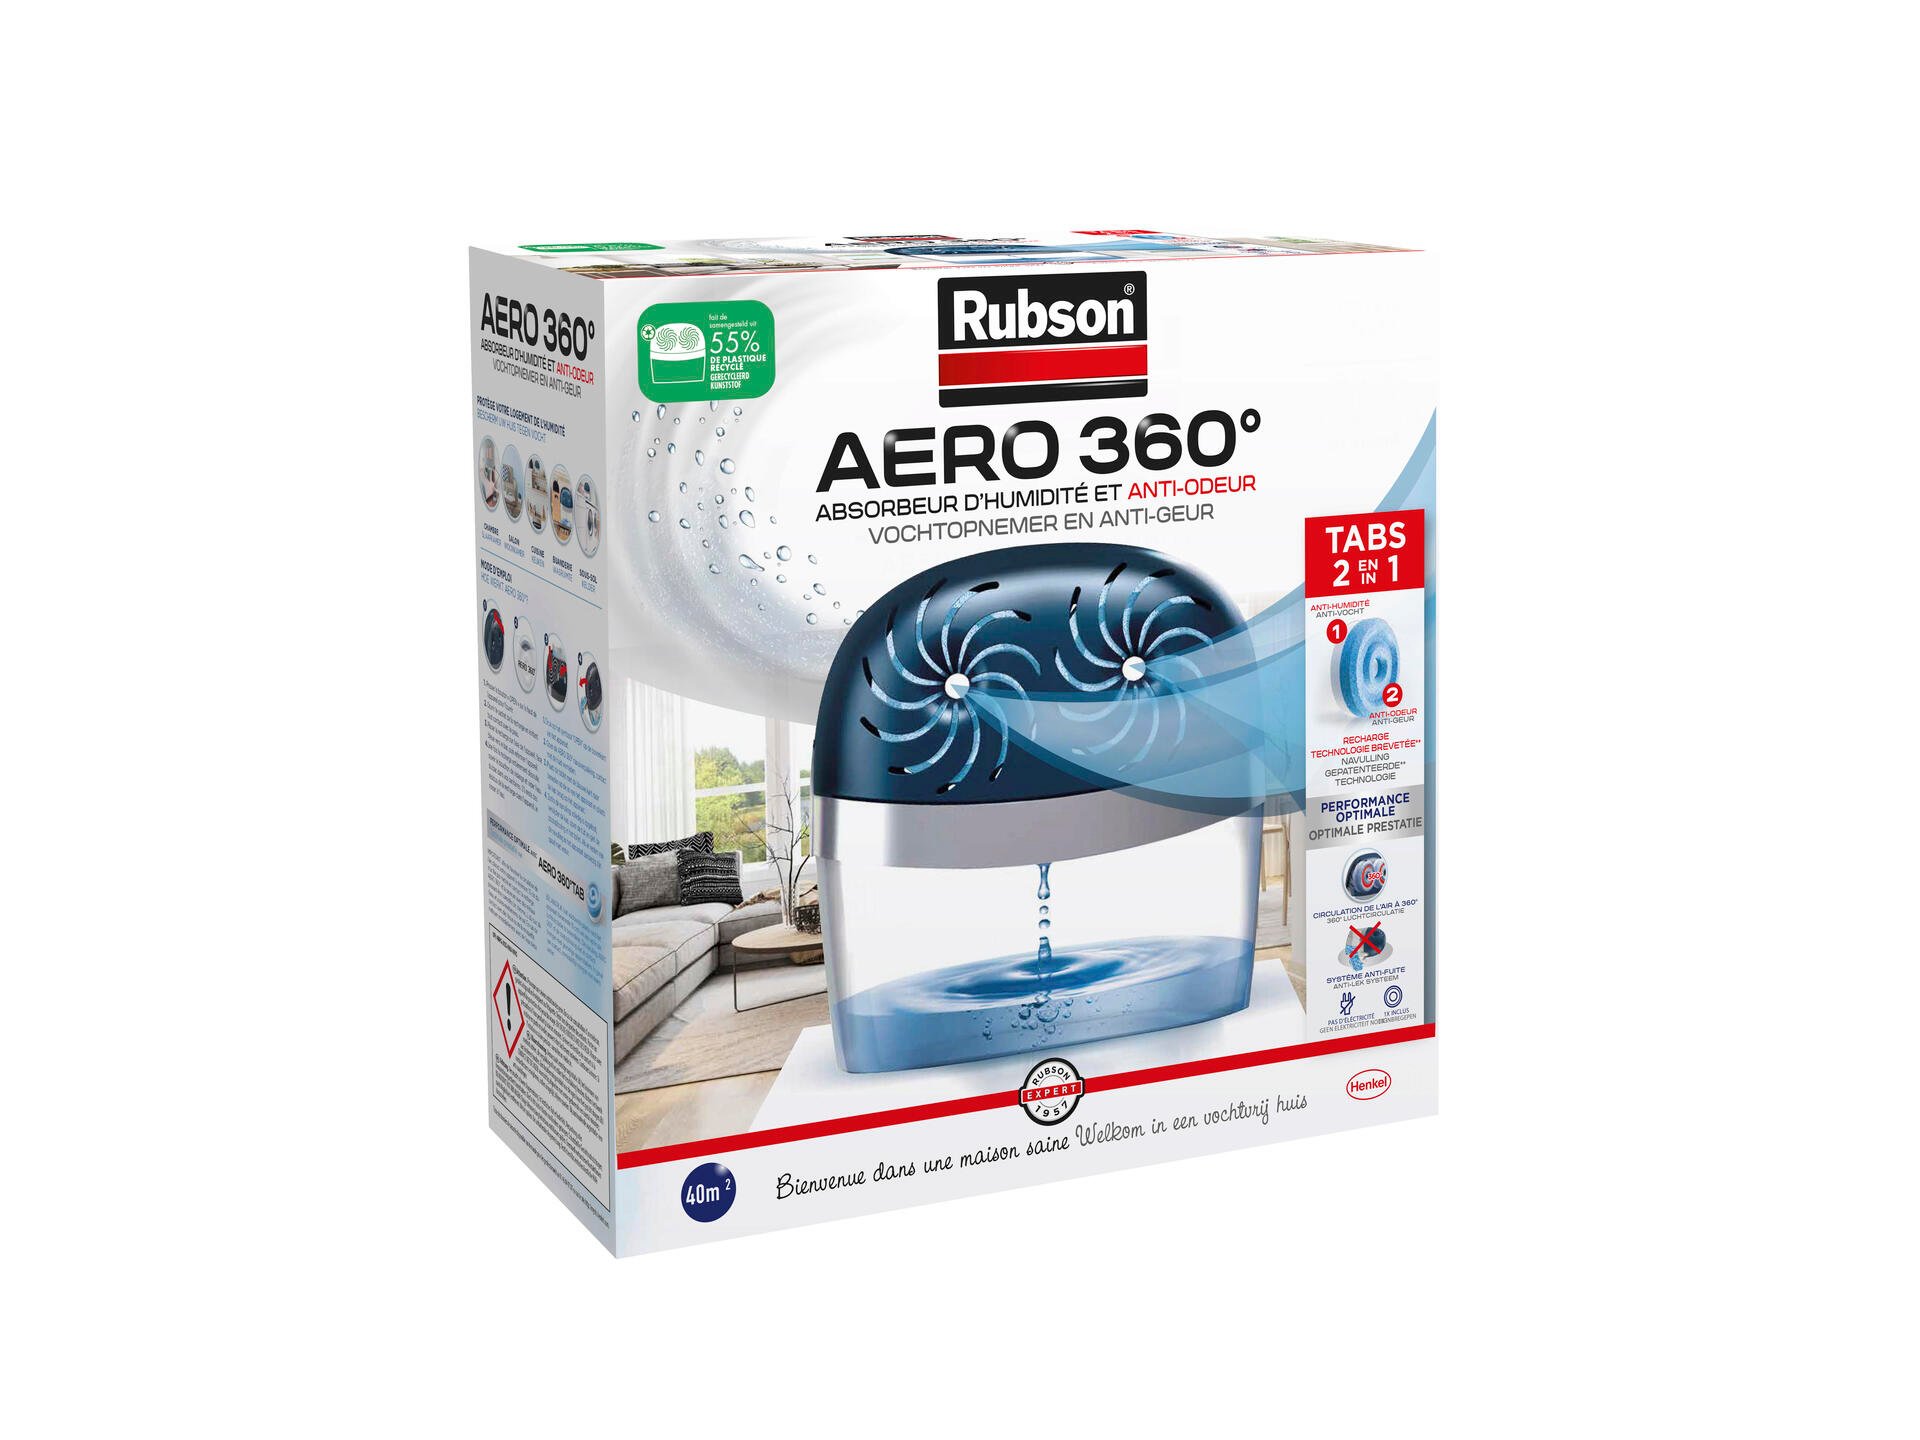 Rubson vochtopnemer Aero 360 - ruimtes tot 40m² - plus 6 neutrale  navullingen 